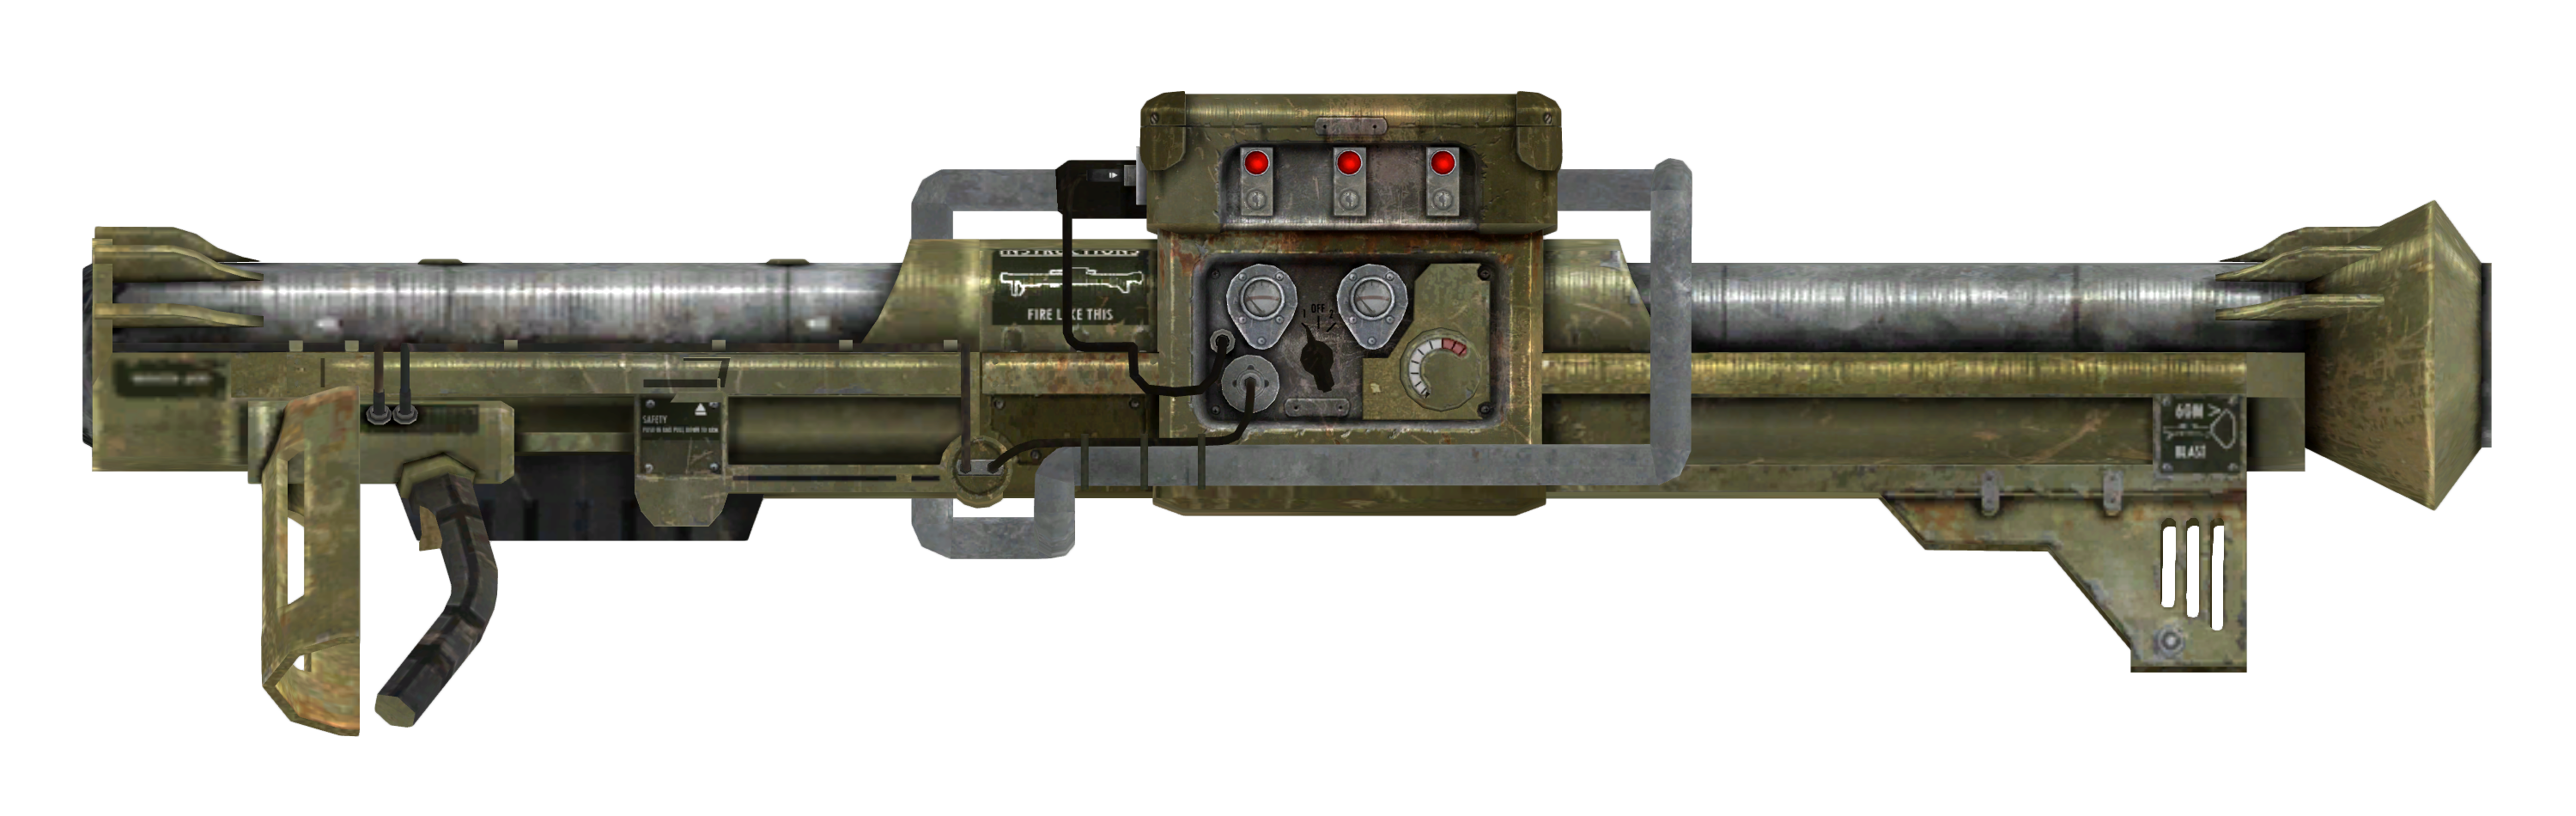 m79 grenade launcher fallout 4